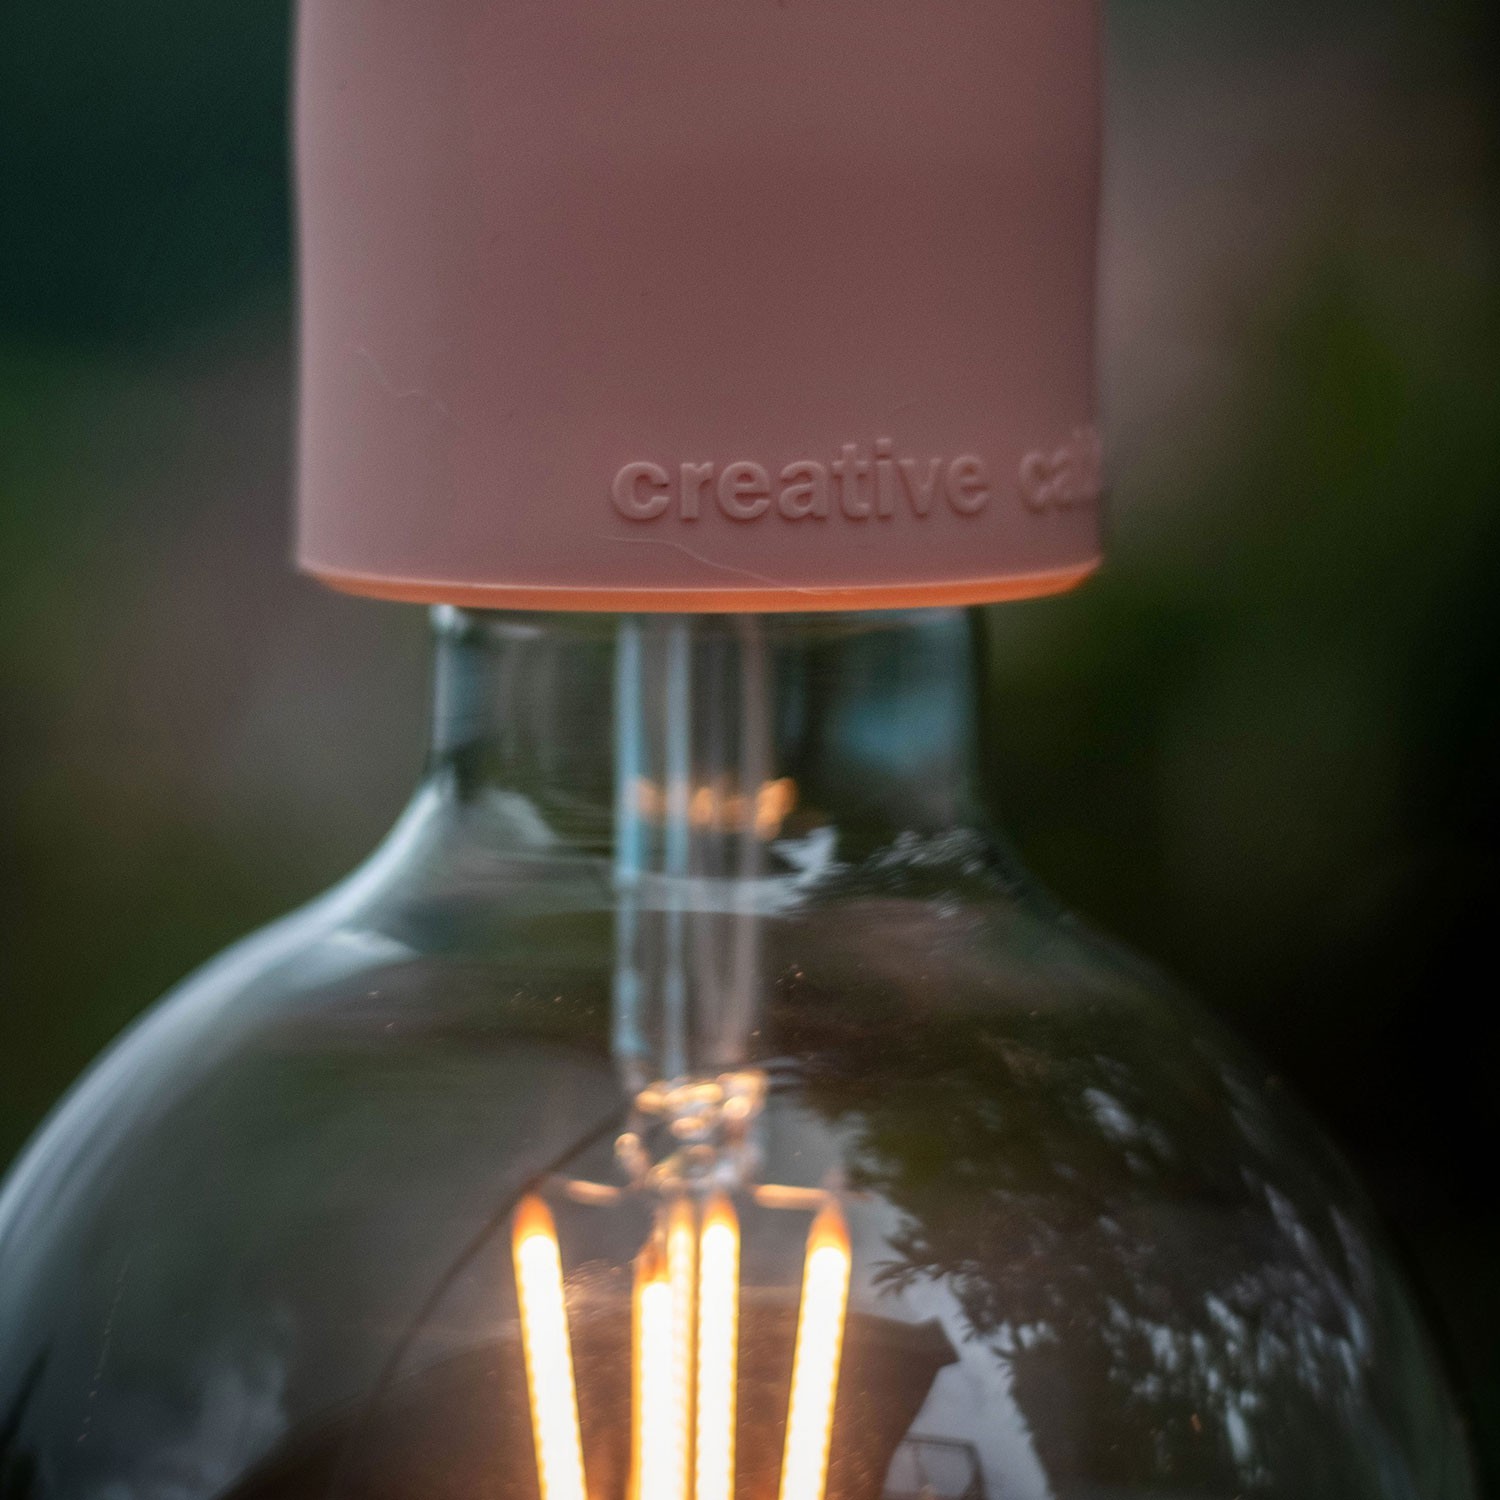 EIVA PASTEL - Závesná lampa do exteriéru IP65 s textilným káblom, farebnou silikónovu rozetou a objímkou, vodeodolná